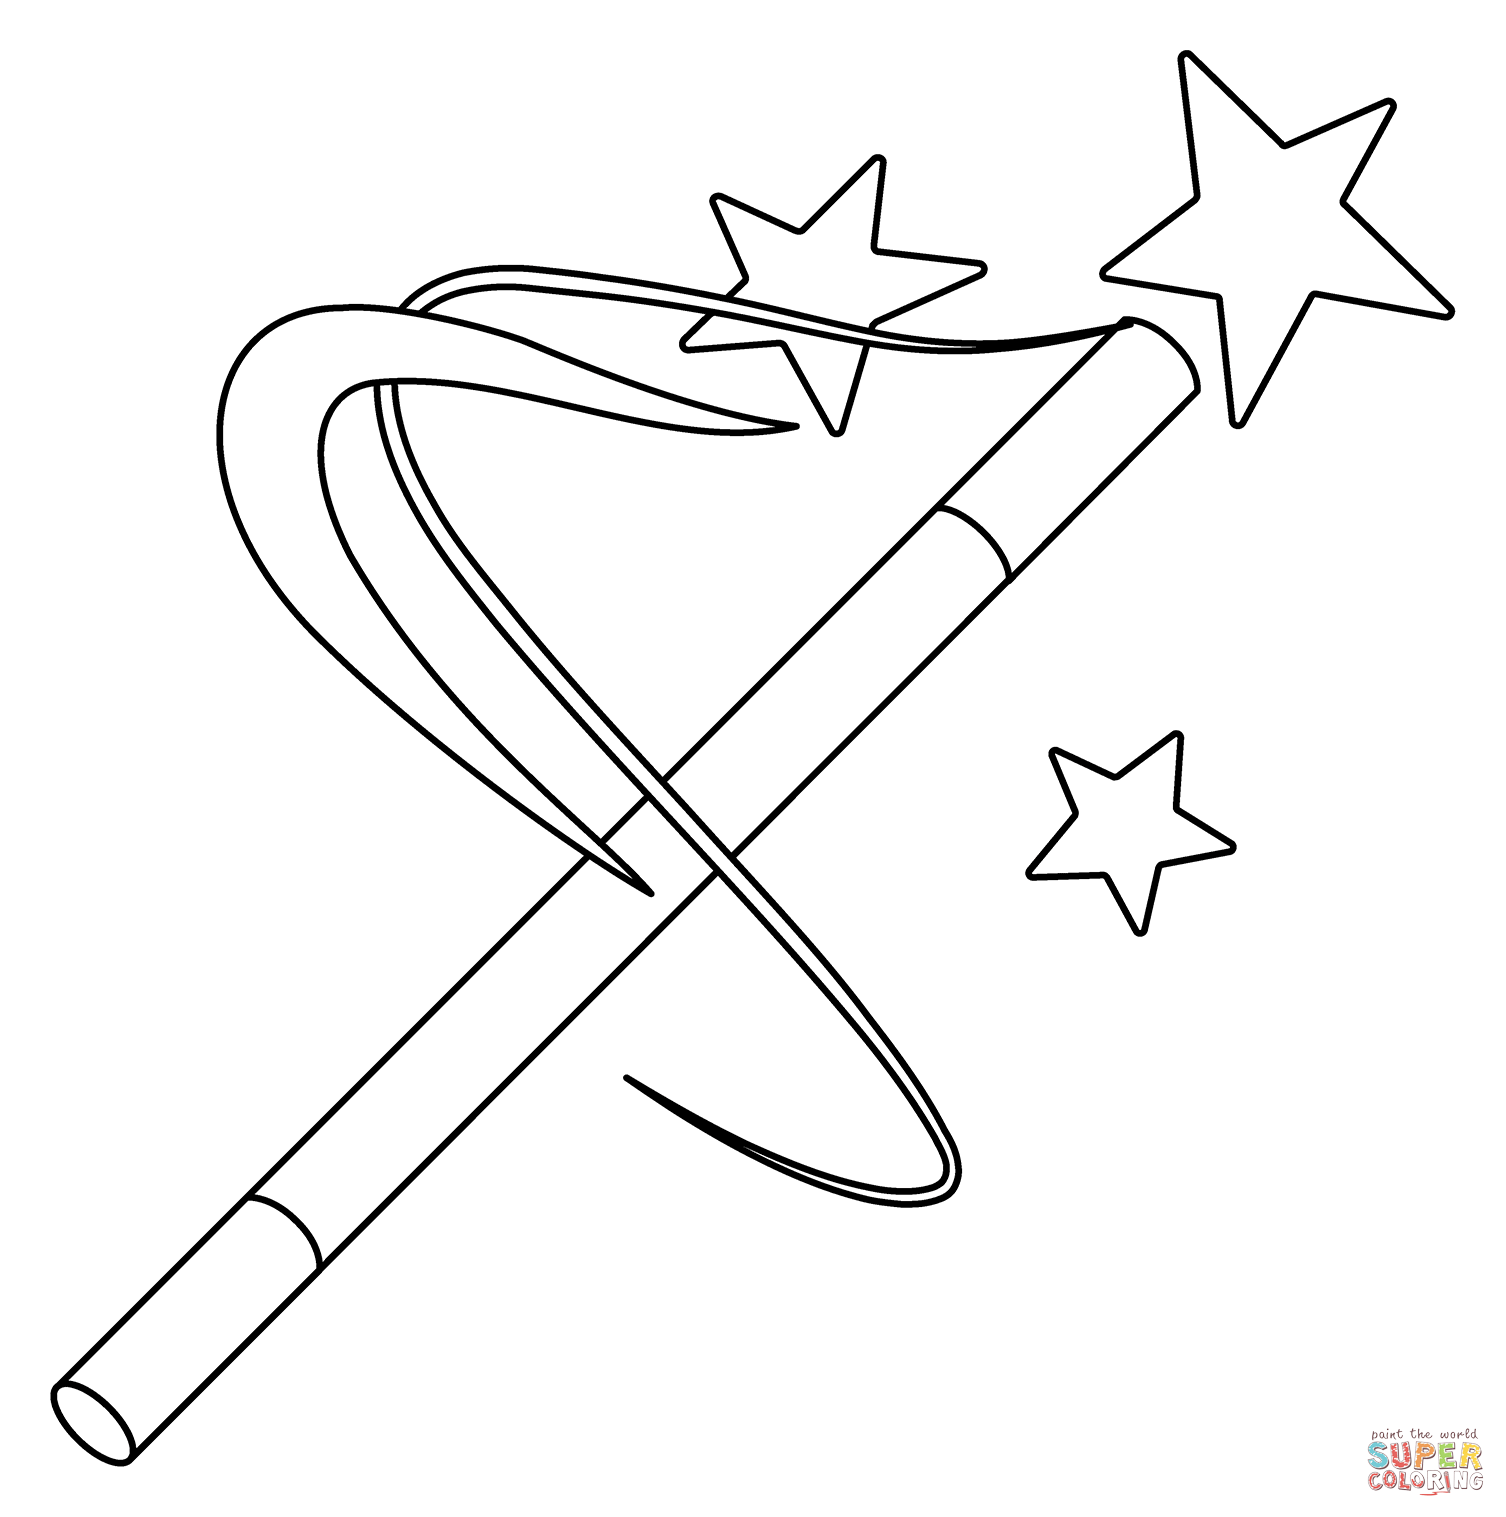 Magic wand emoji coloring page free printable coloring pages